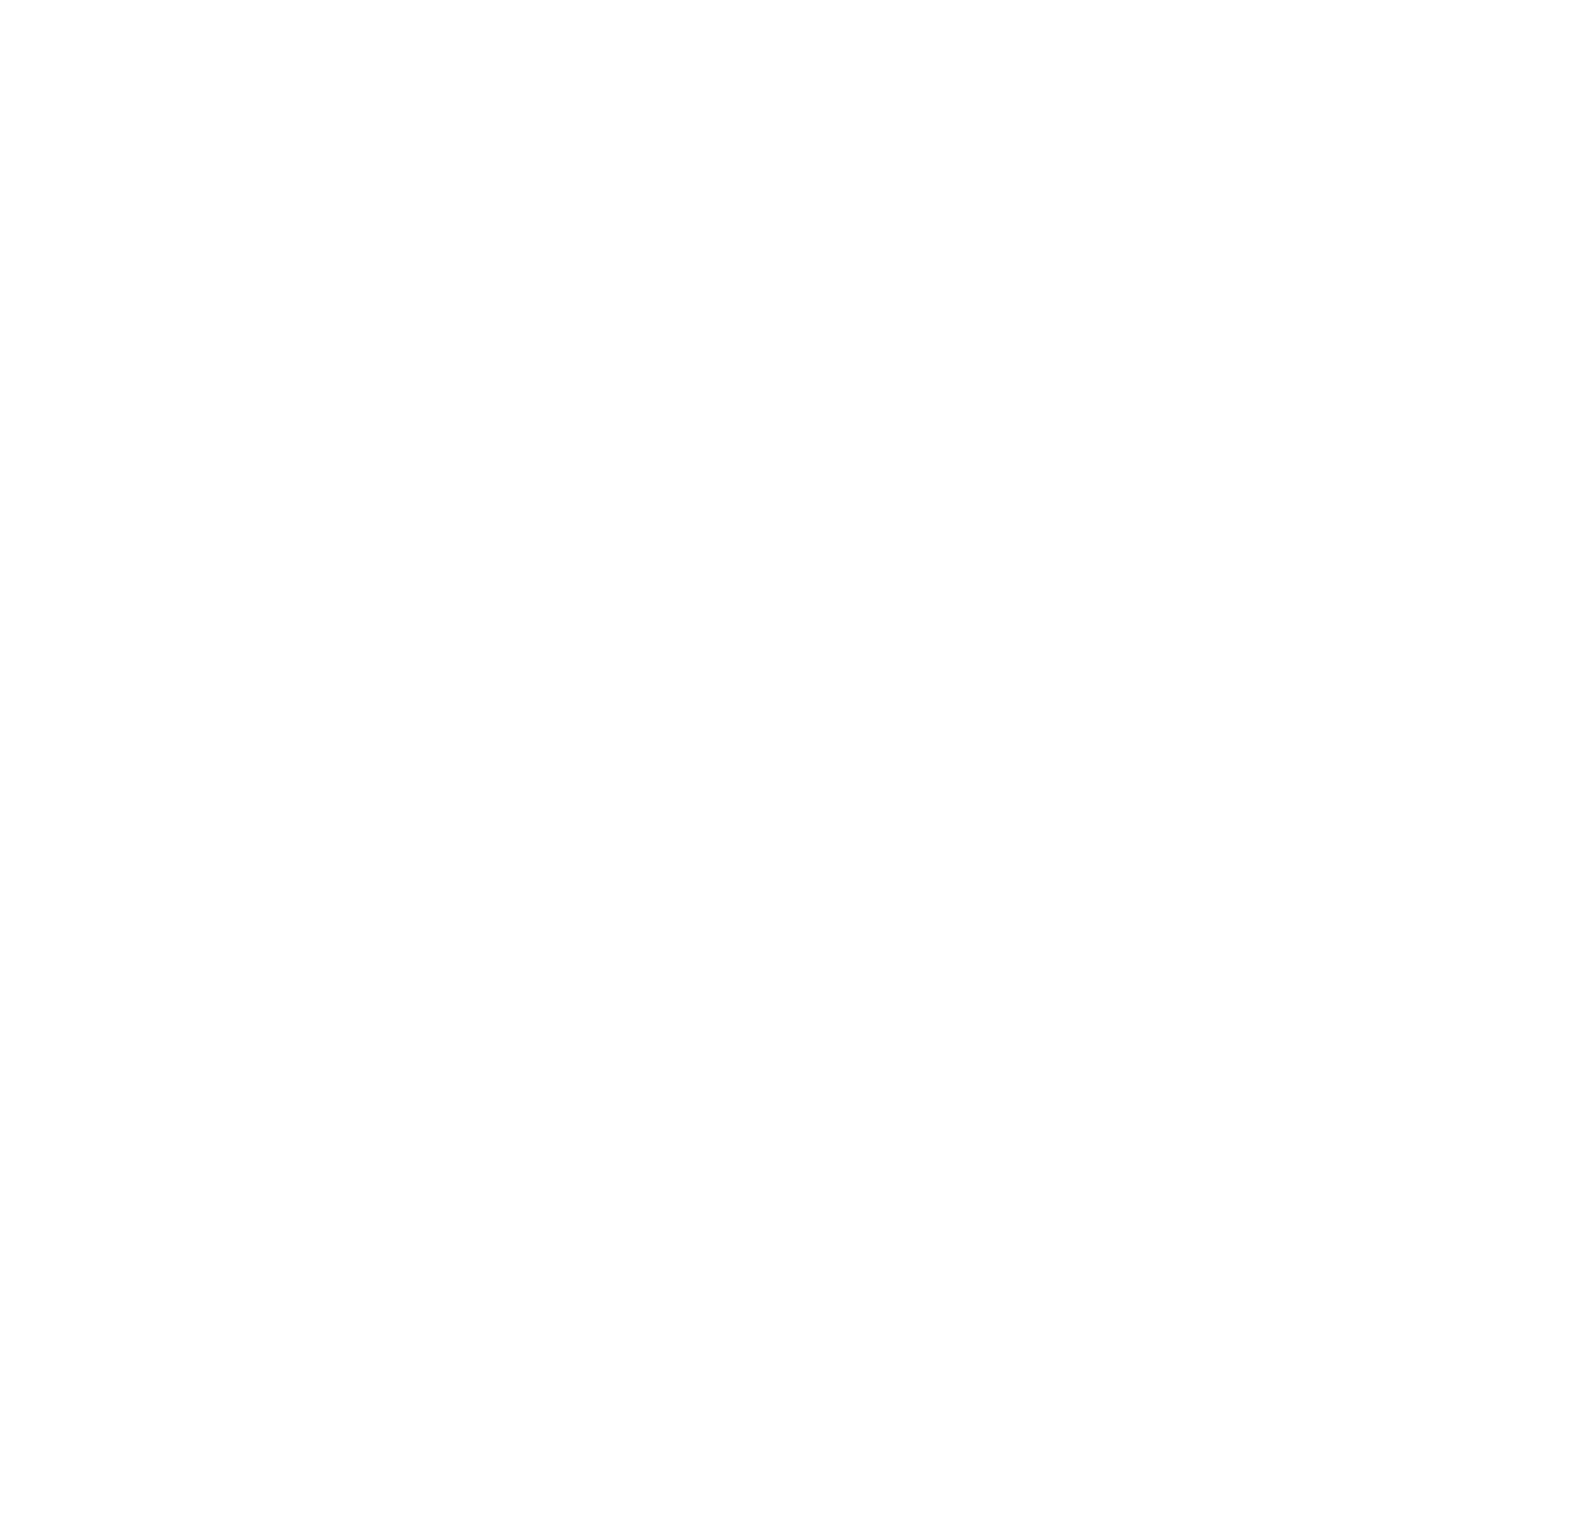 NTT (Nippon Telegraph & Telephone)

 logo pour fonds sombres (PNG transparent)